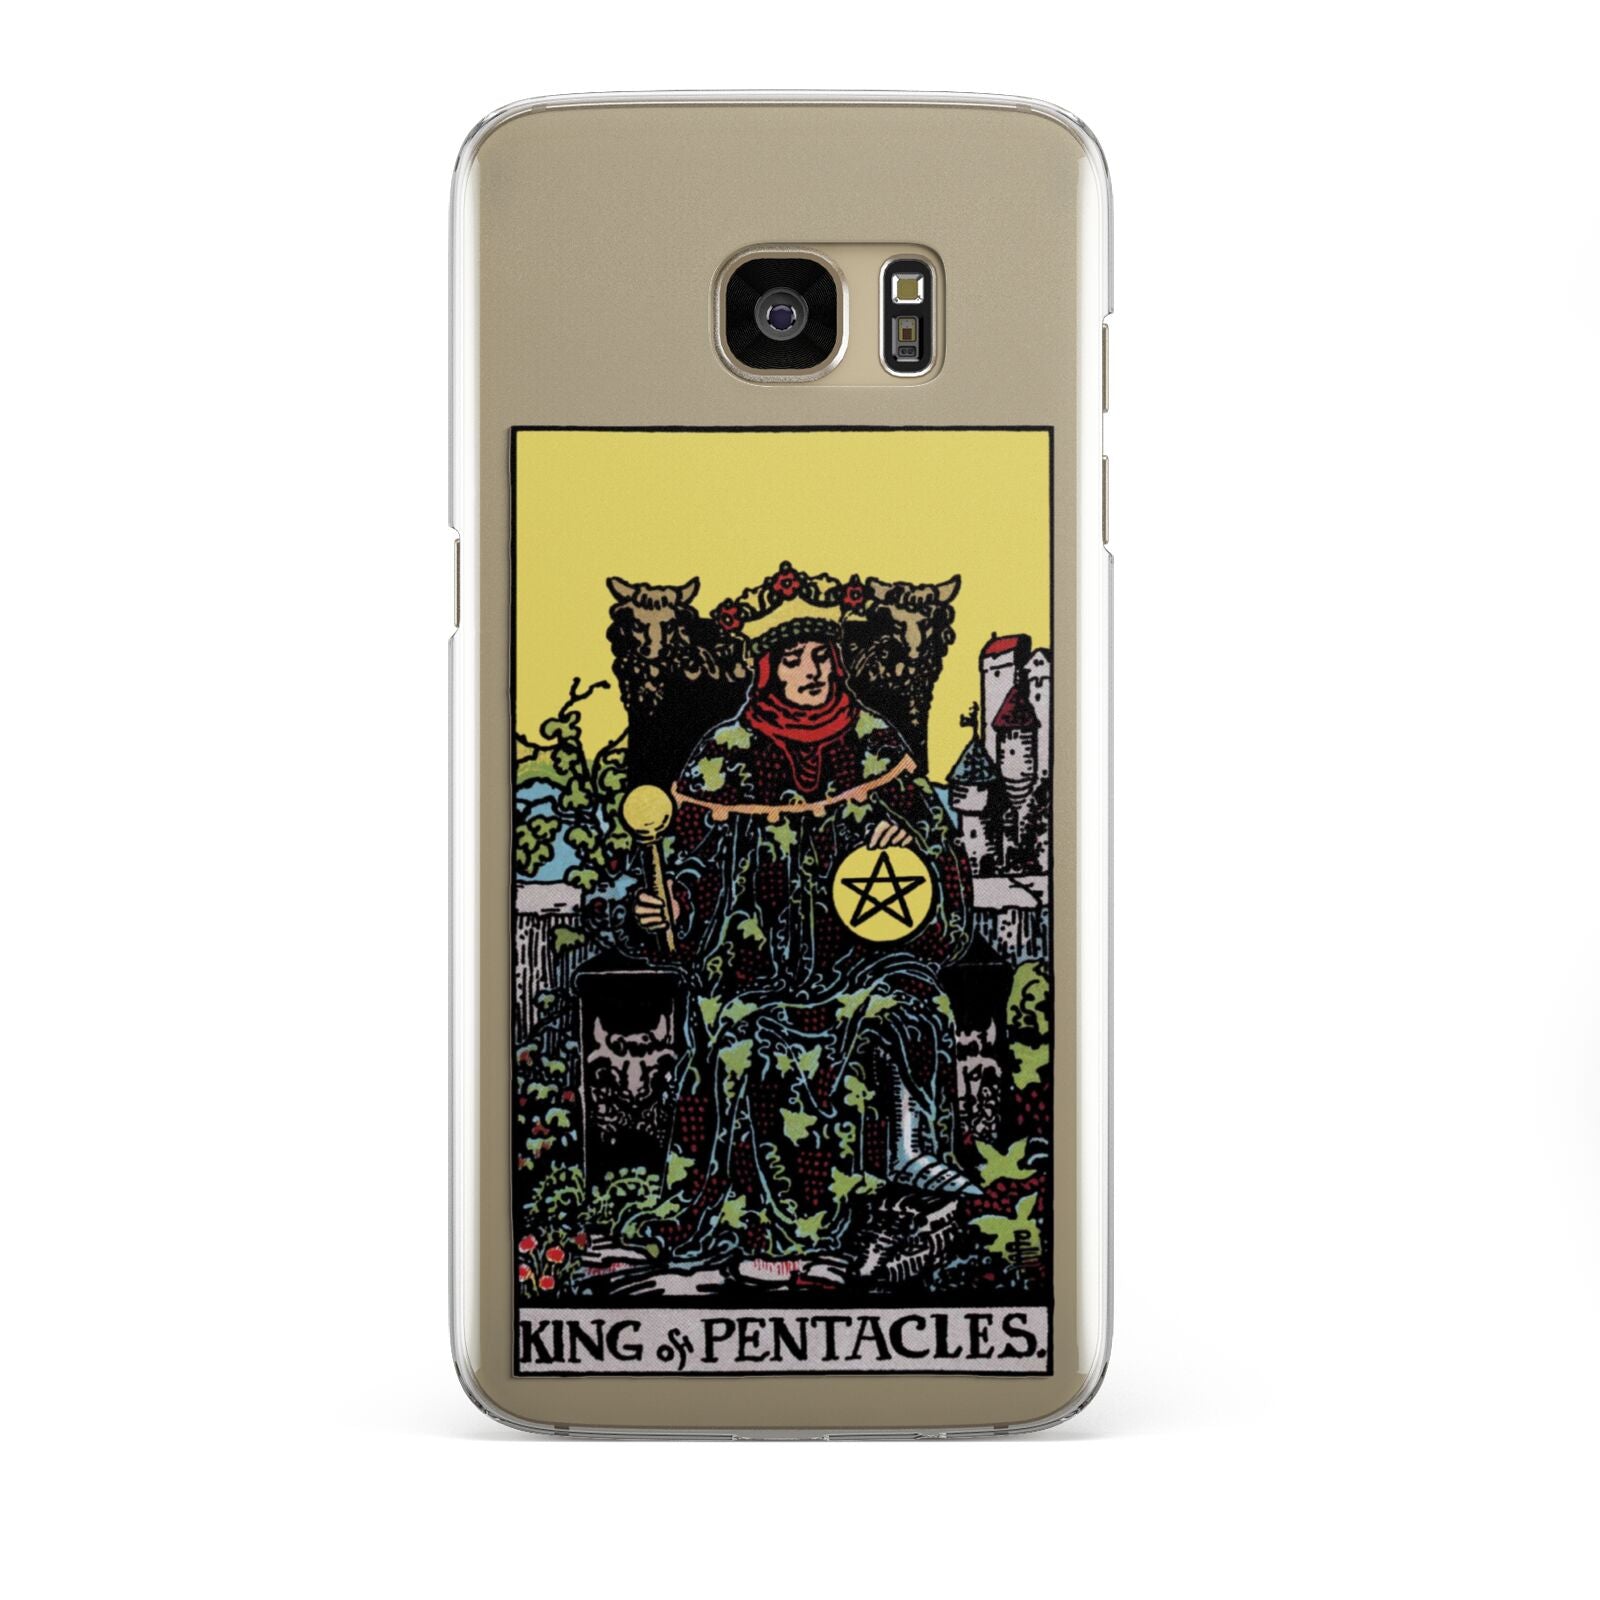 King of Pentacles Tarot Card Samsung Galaxy S7 Edge Case